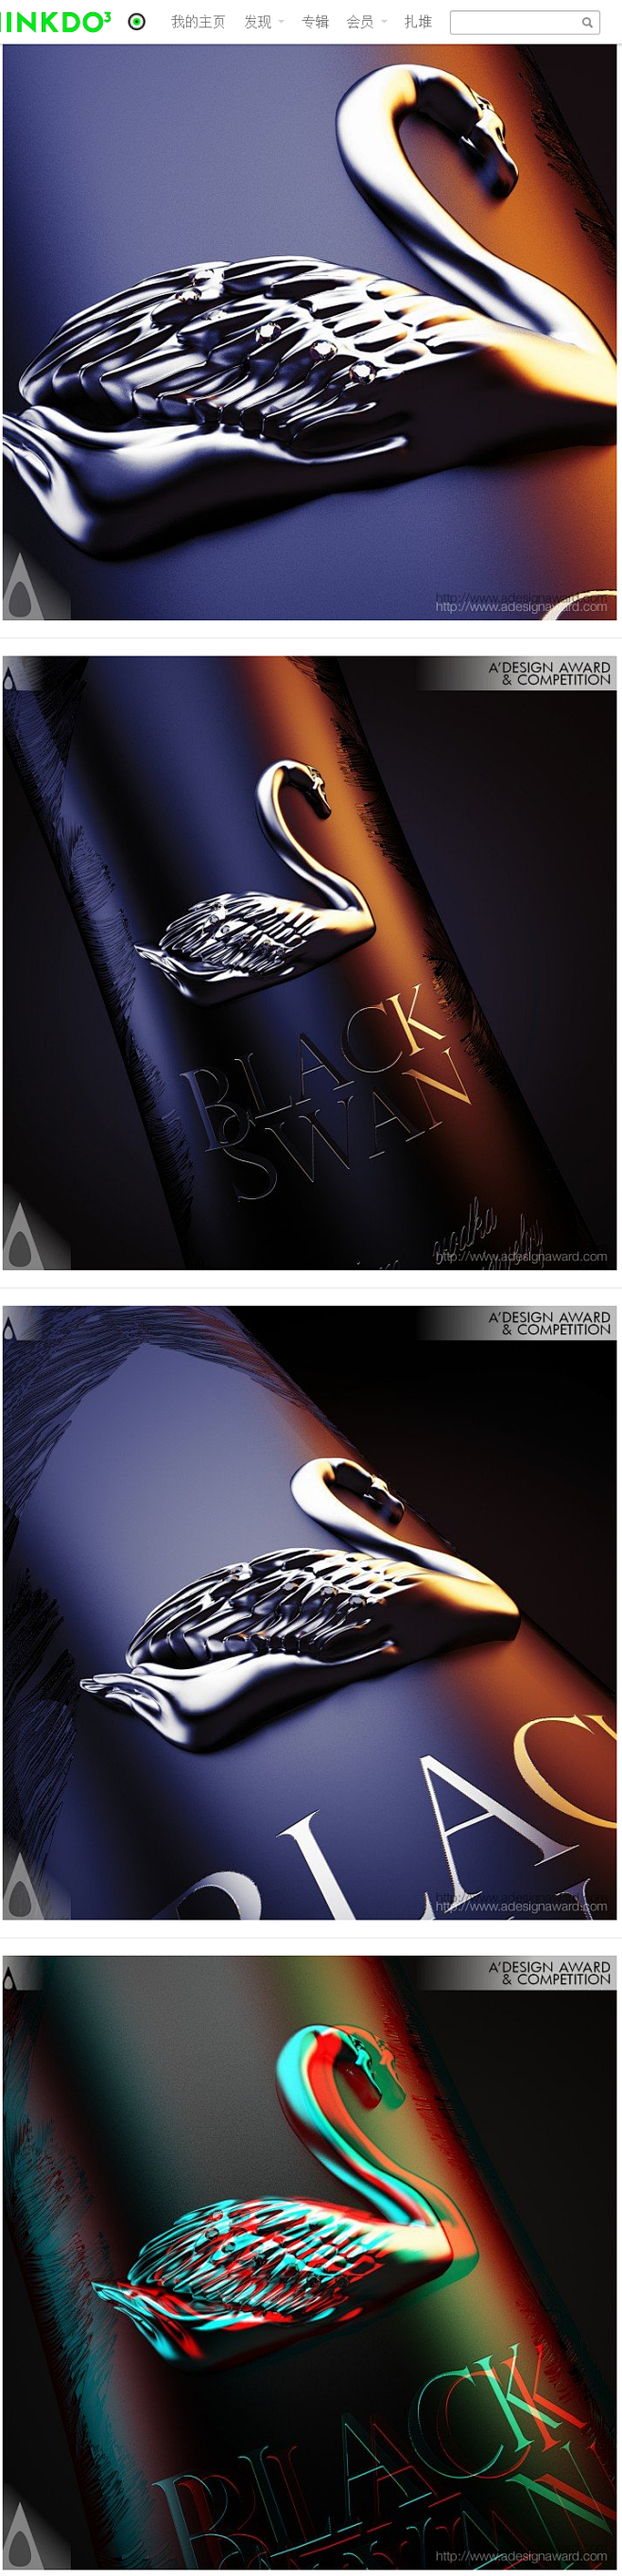 BlackSwan 伏特加酒标签设计//...